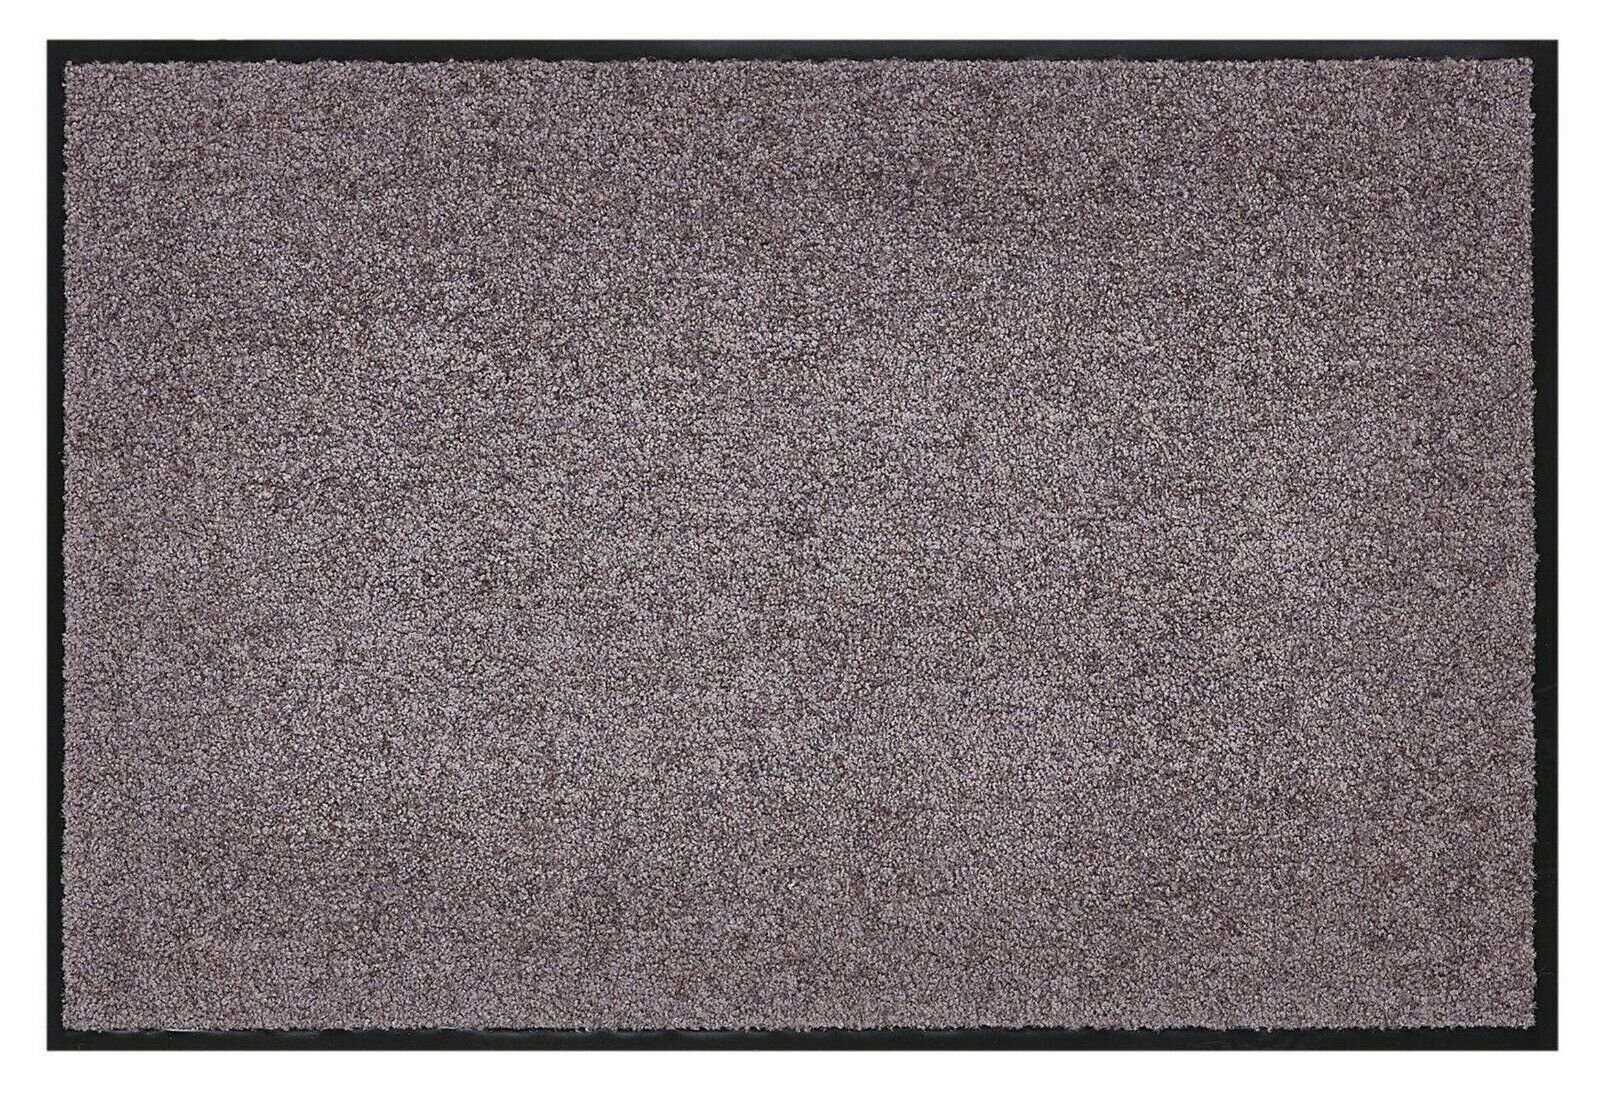 Fußmatte Premium, Andiamo, rechteckig, Höhe: 7 mm, Maschinenwaschbar bei 30°C, mit robuster Vinylumrandung, dichter Flor